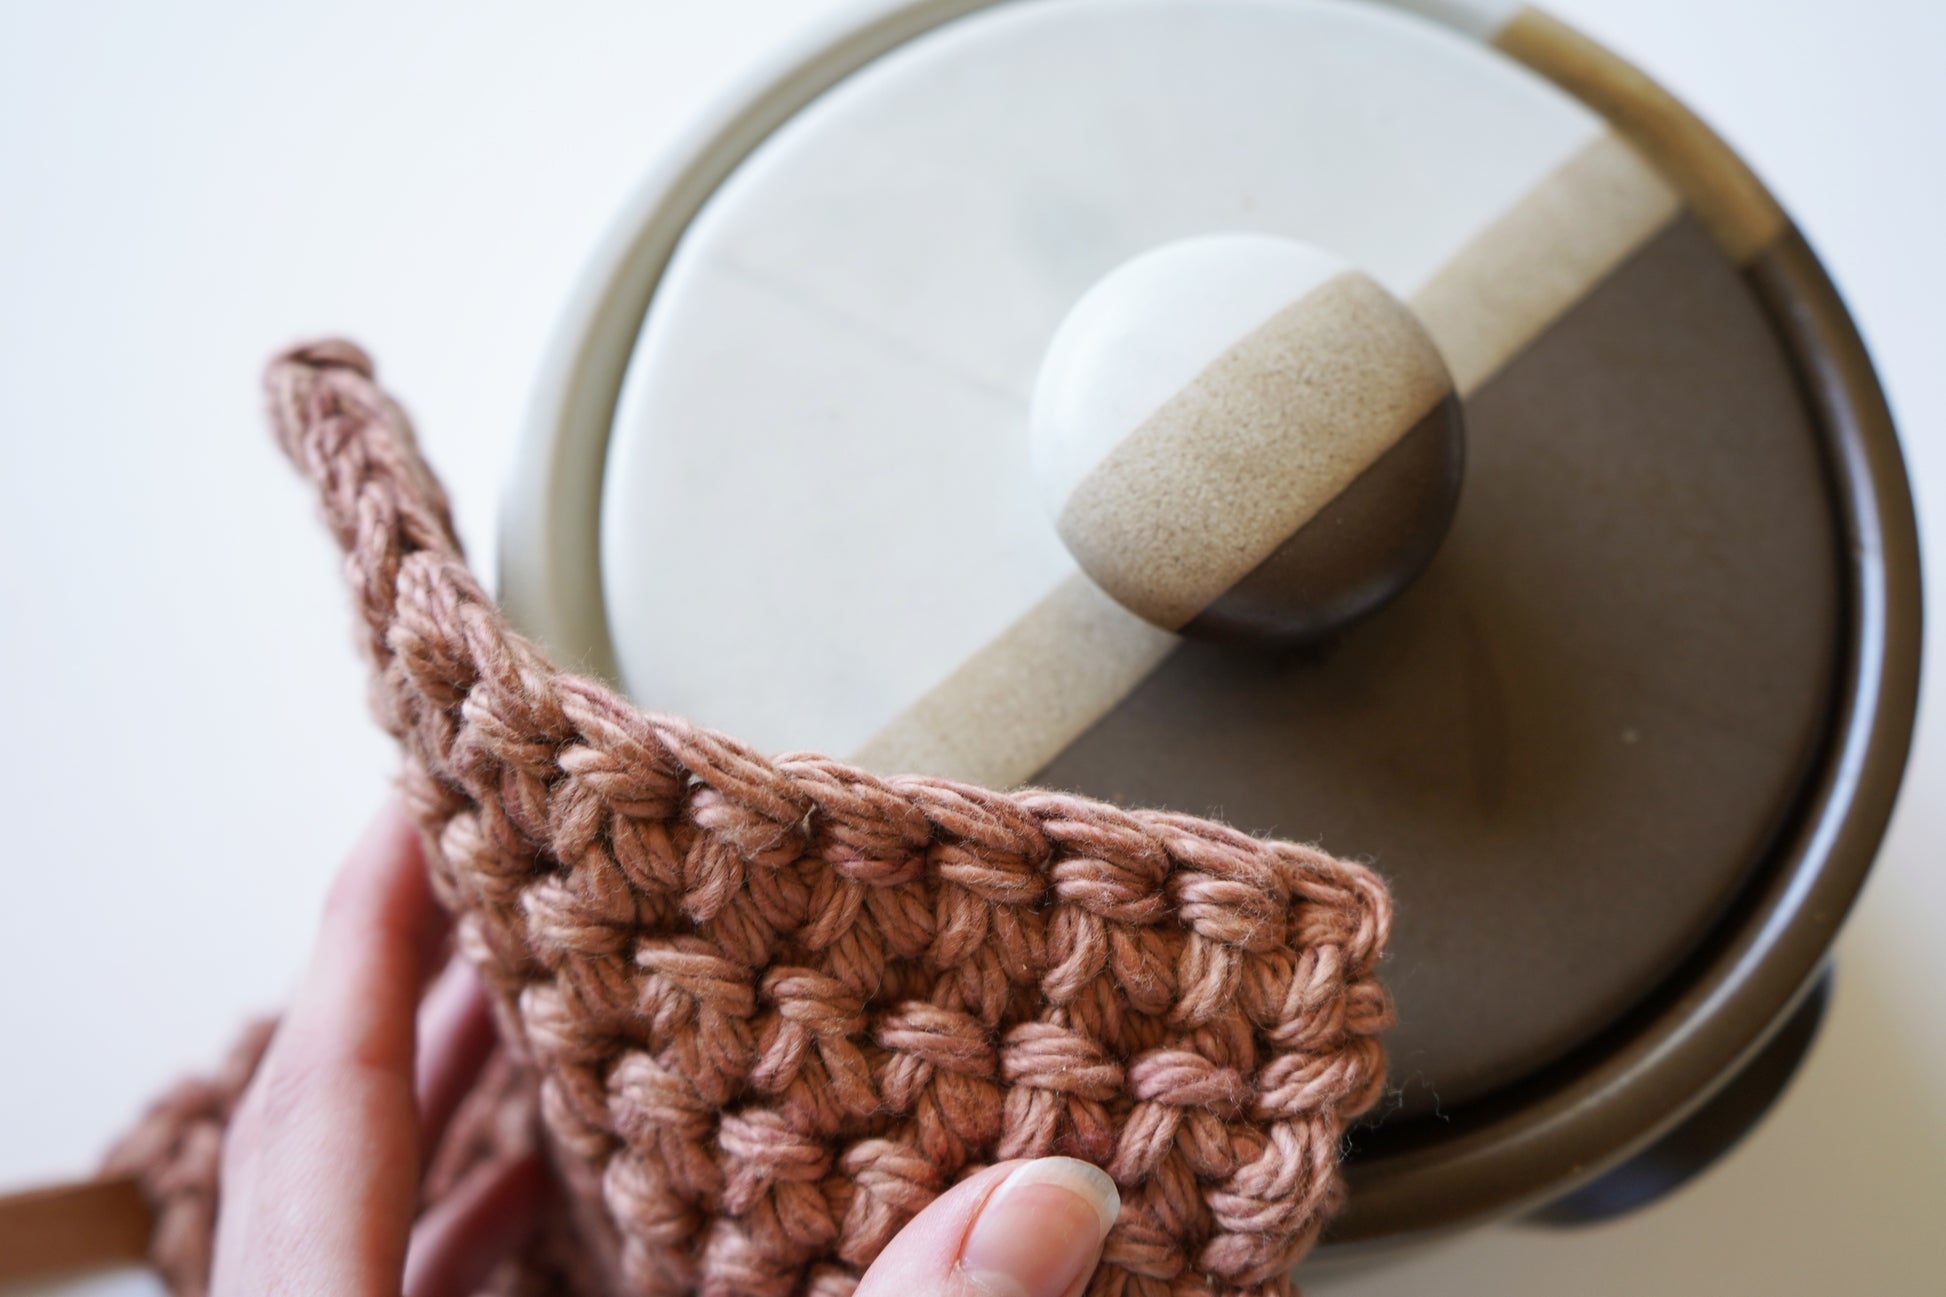 Circular Potholders  The Caped Crocheter